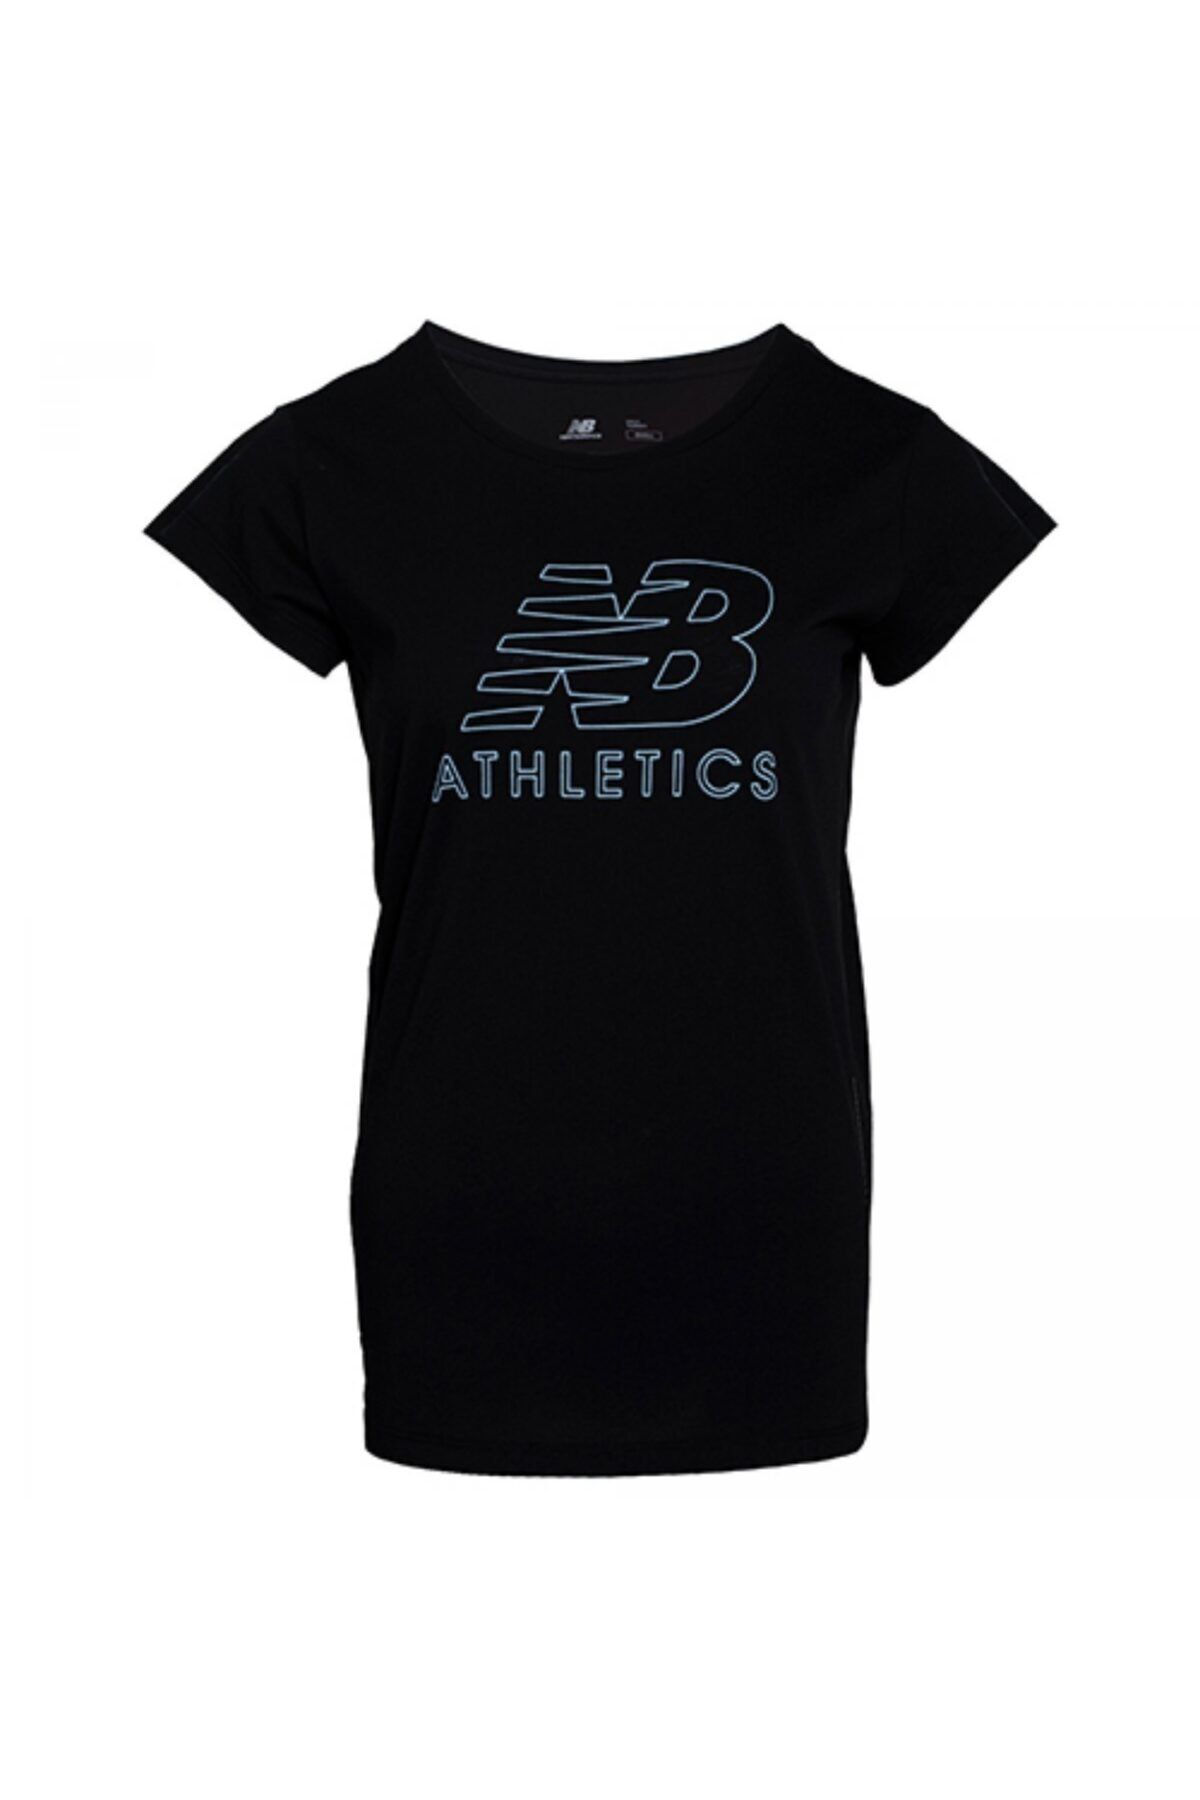 New Balance Athletıcs Womens Tee Siyah Kadın Tişört - Wps003-bk